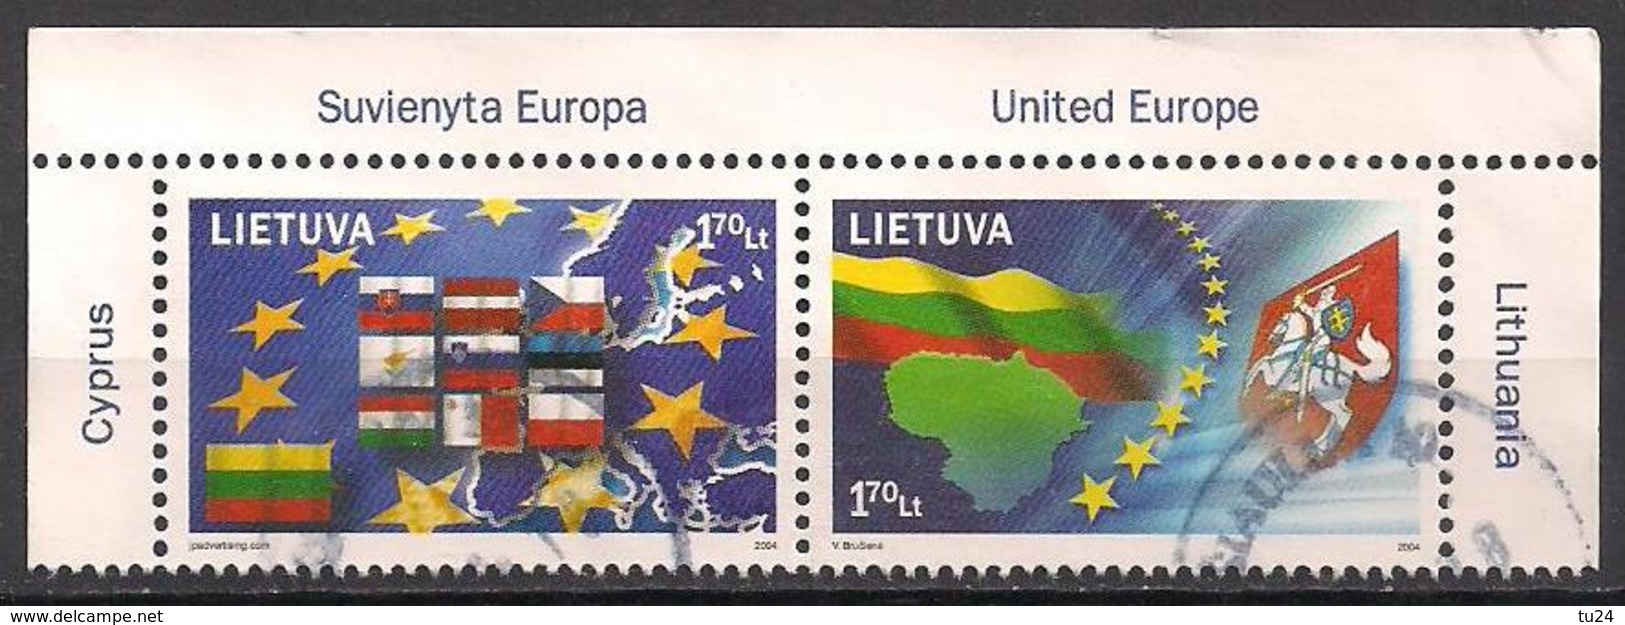 Litauen  (2004)  Mi.Nr.  844 + 845  Gest. / Used  (4fc02) - Litauen